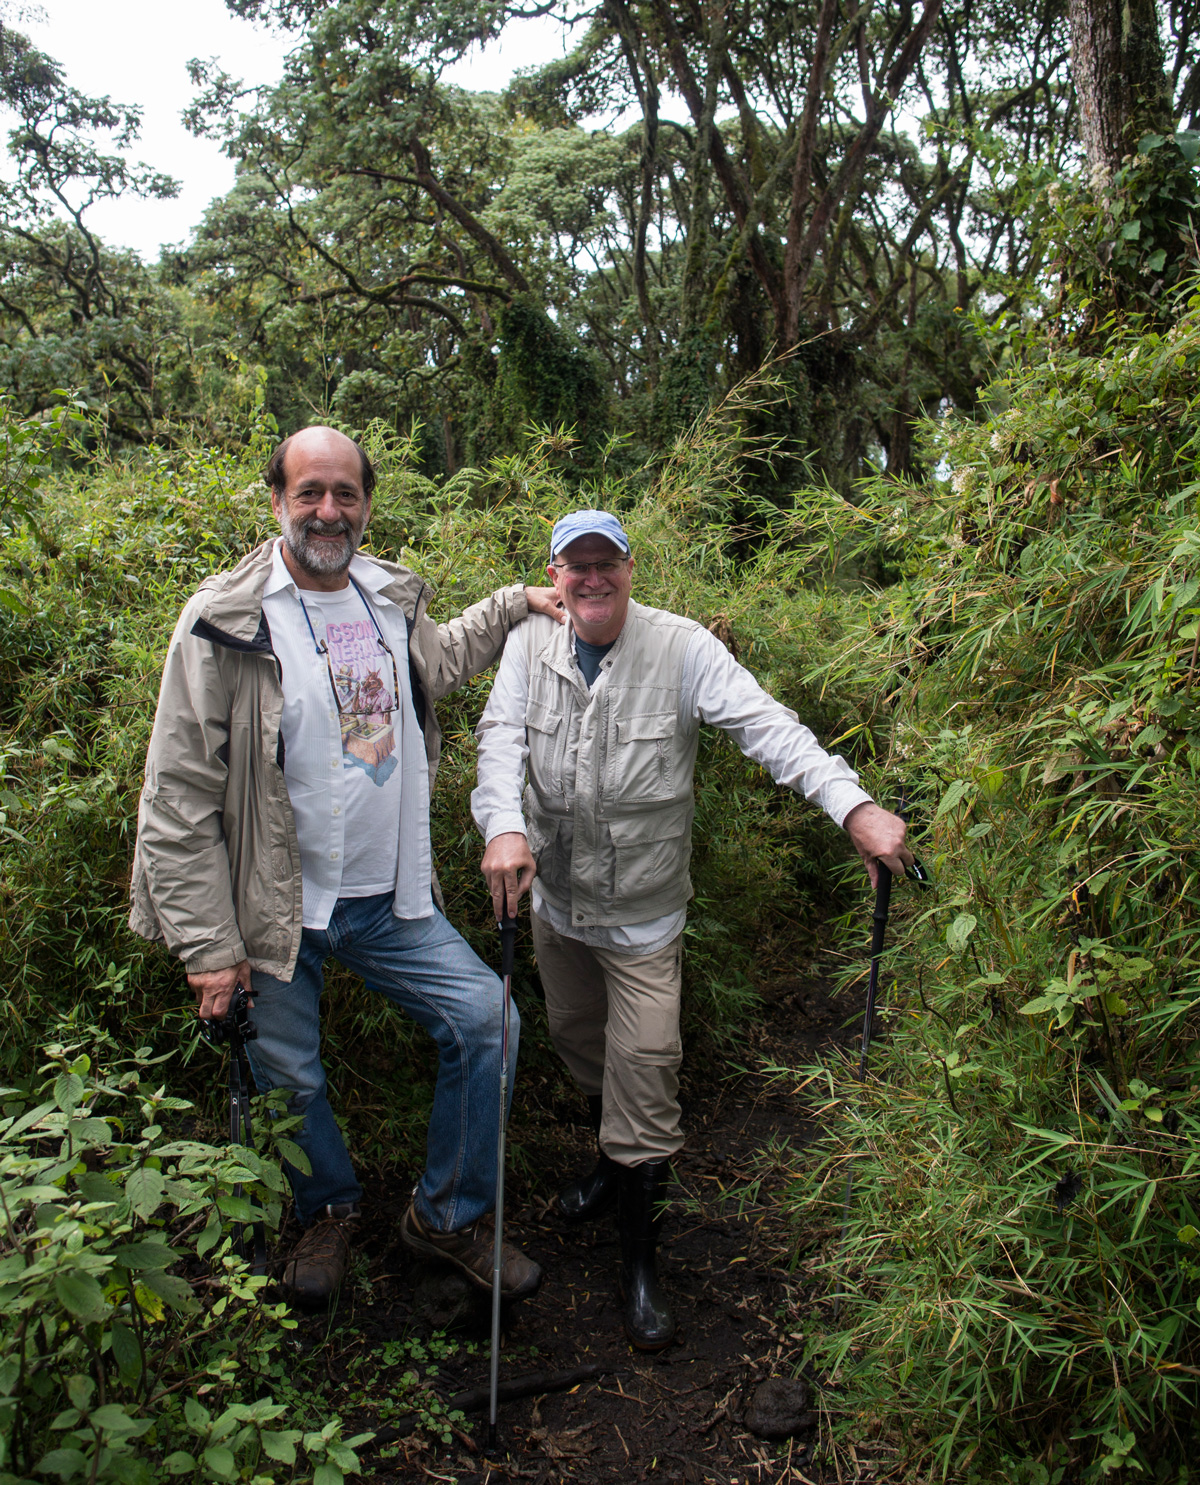 Dana Schorr and Richard Hughes returning from a trek to see the silverback gorillas in Rwanda in 2013.